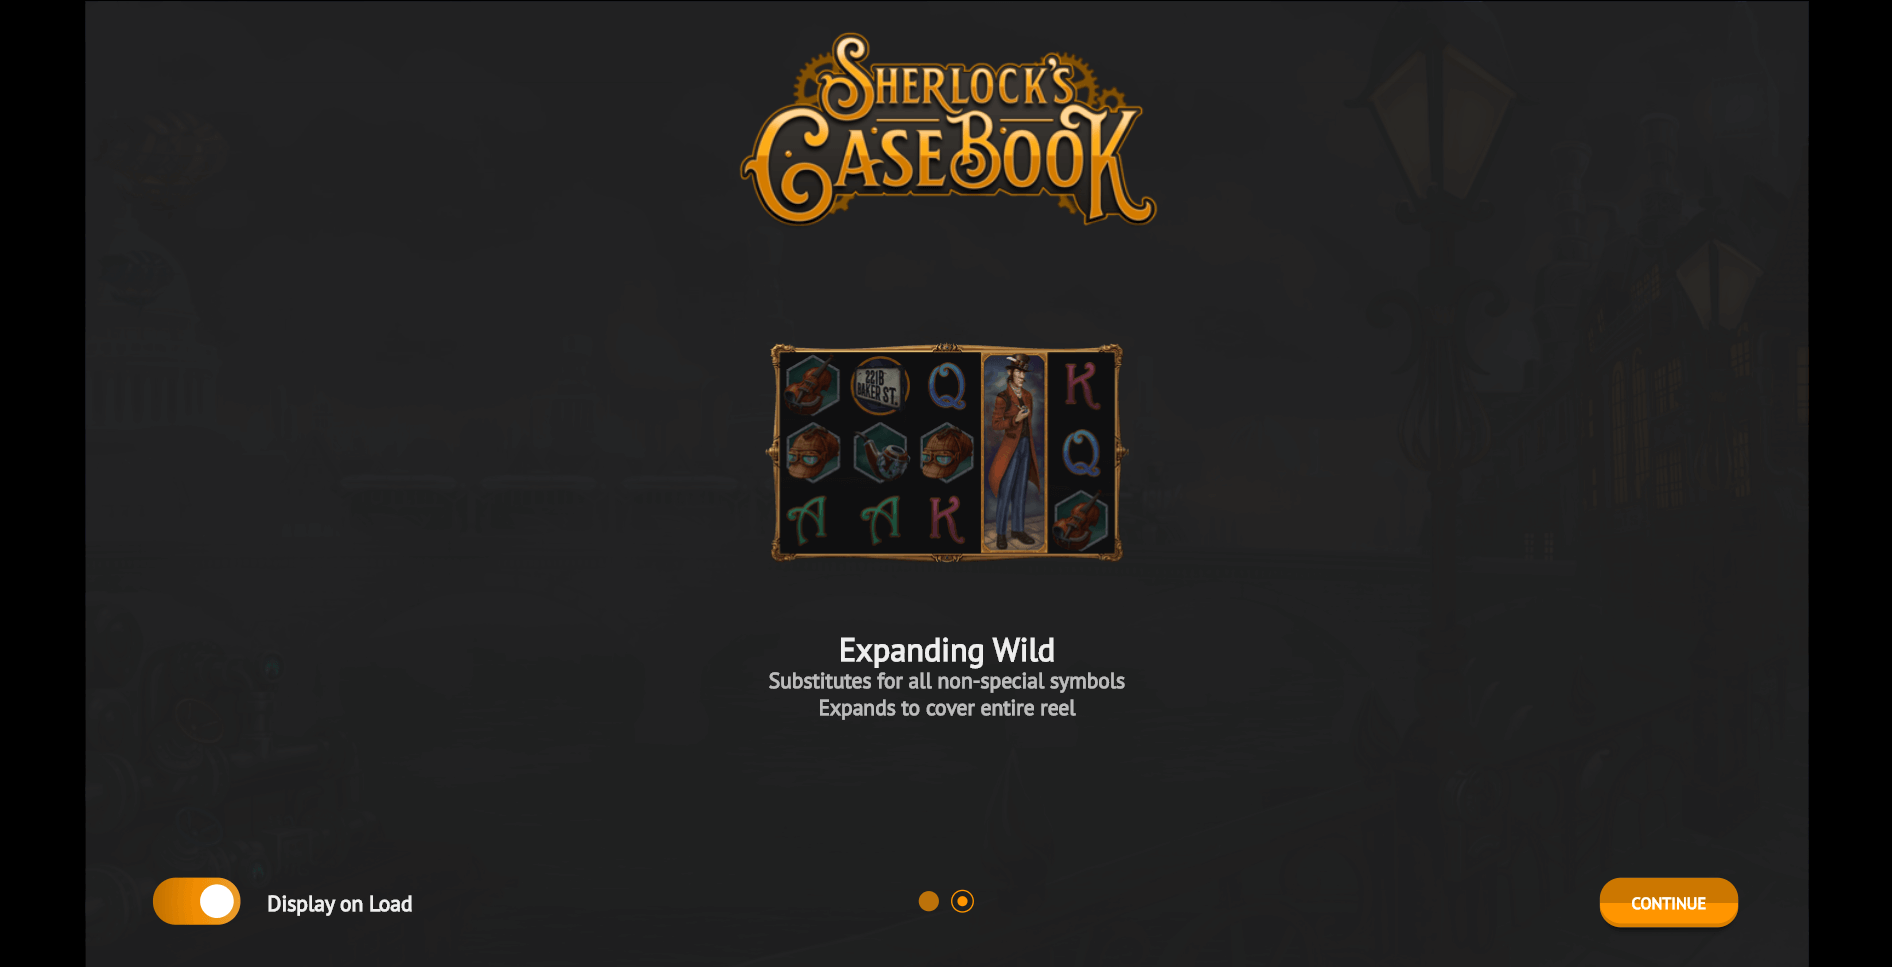 sherlocks casebook slot machine detail image 0